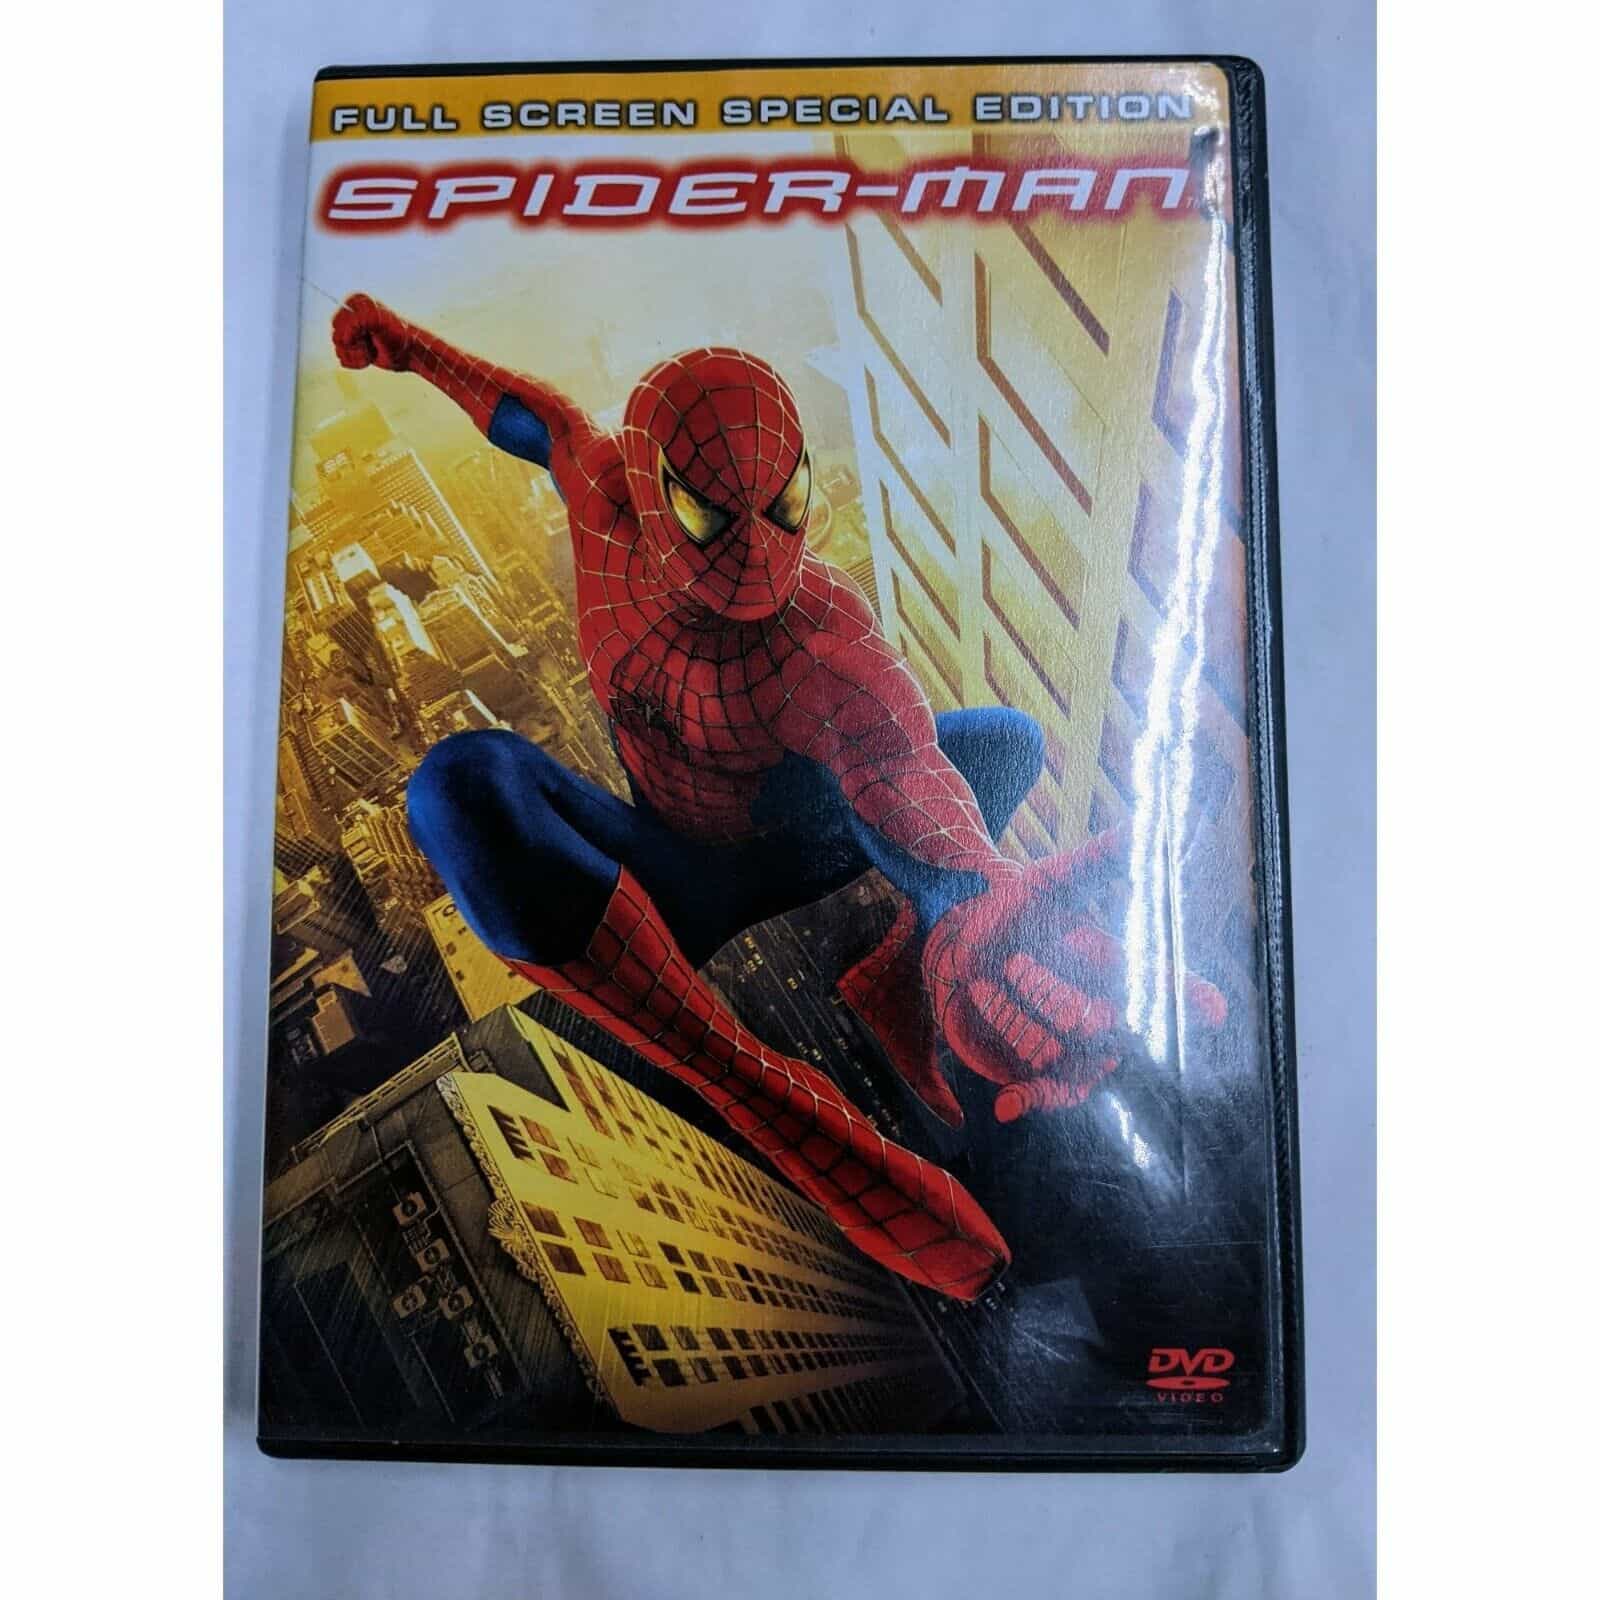 Spider-Man Full screen Special Edition DVD Movie